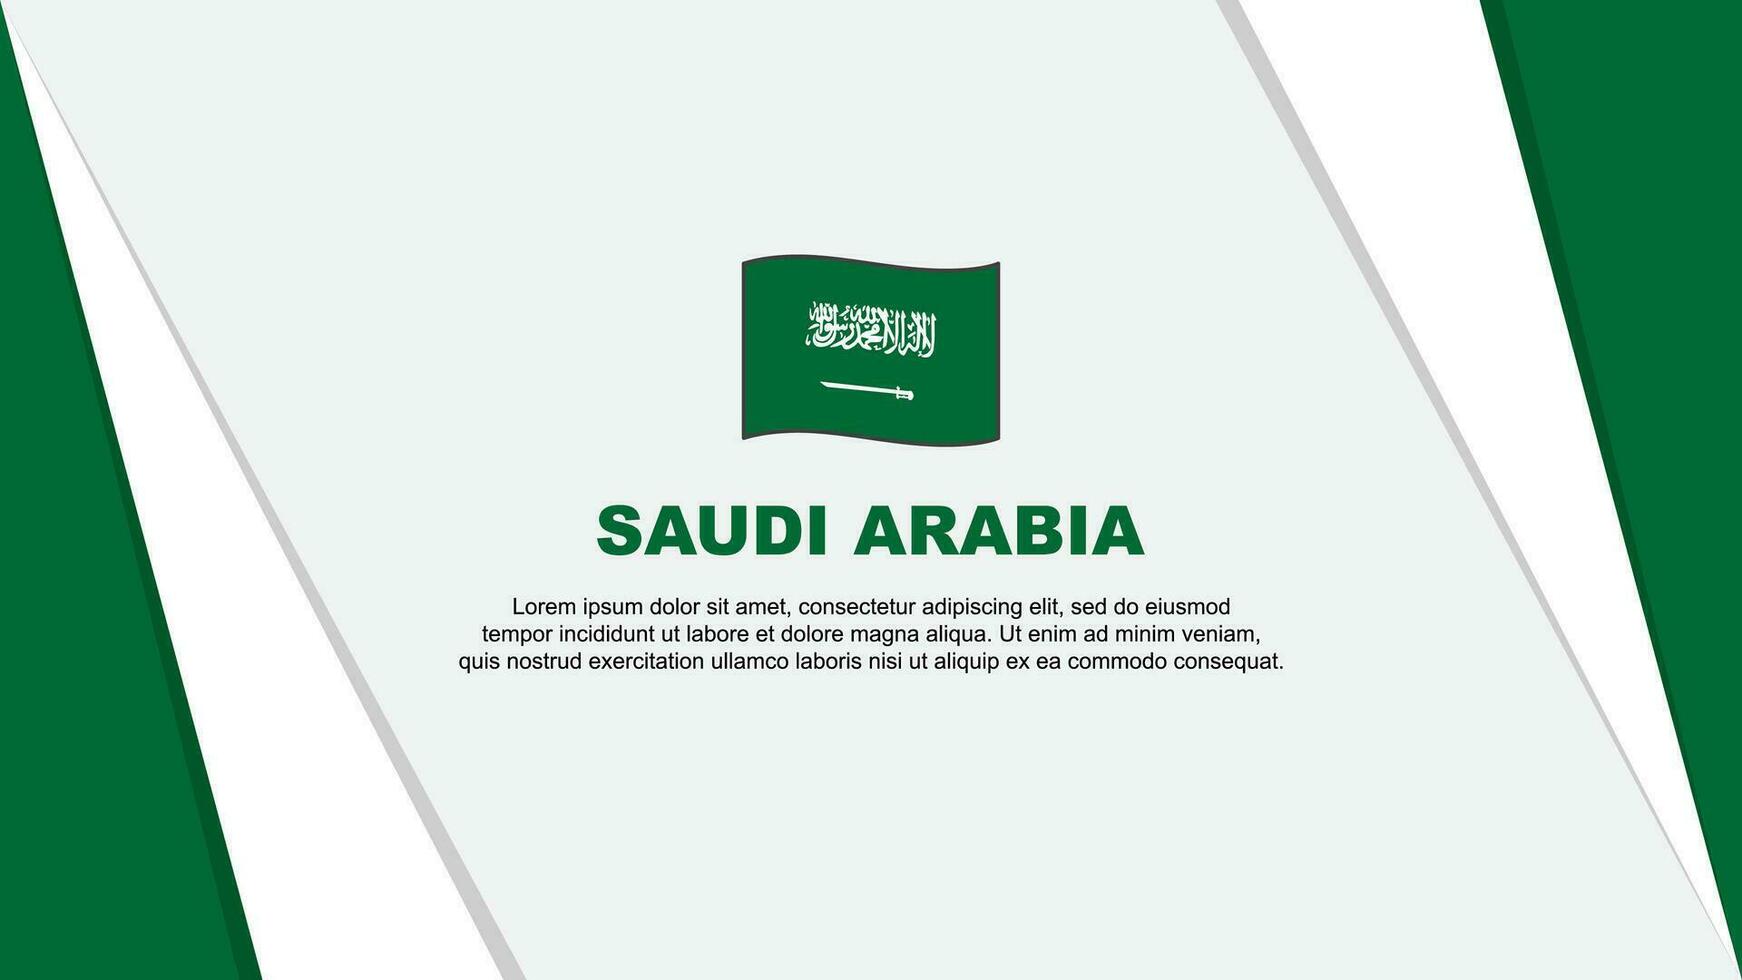 Saudi Arabia Flag Abstract Background Design Template. Saudi Arabia Independence Day Banner Cartoon Vector Illustration. Saudi Arabia Flag